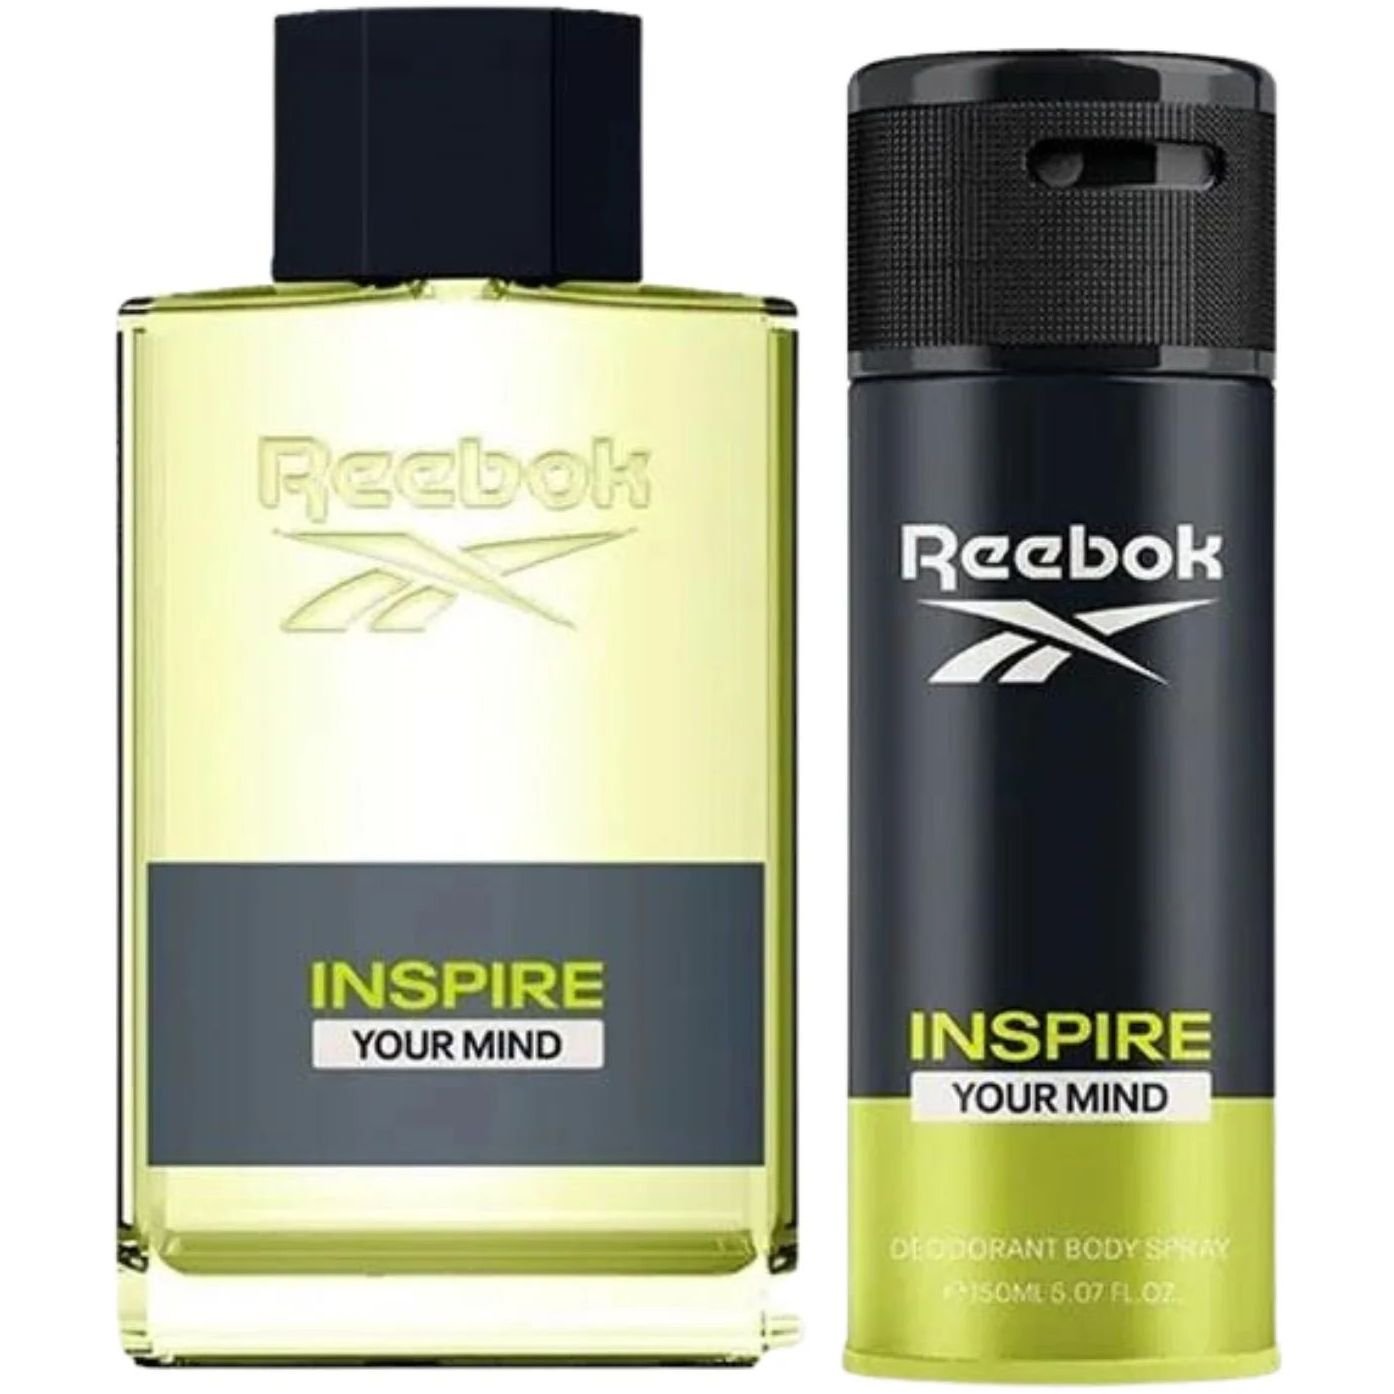 Подарочный набор для мужчин Reebok Inspire your mind: Туалетная вода 100 мл + Дезодорант 150 мл - фото 2